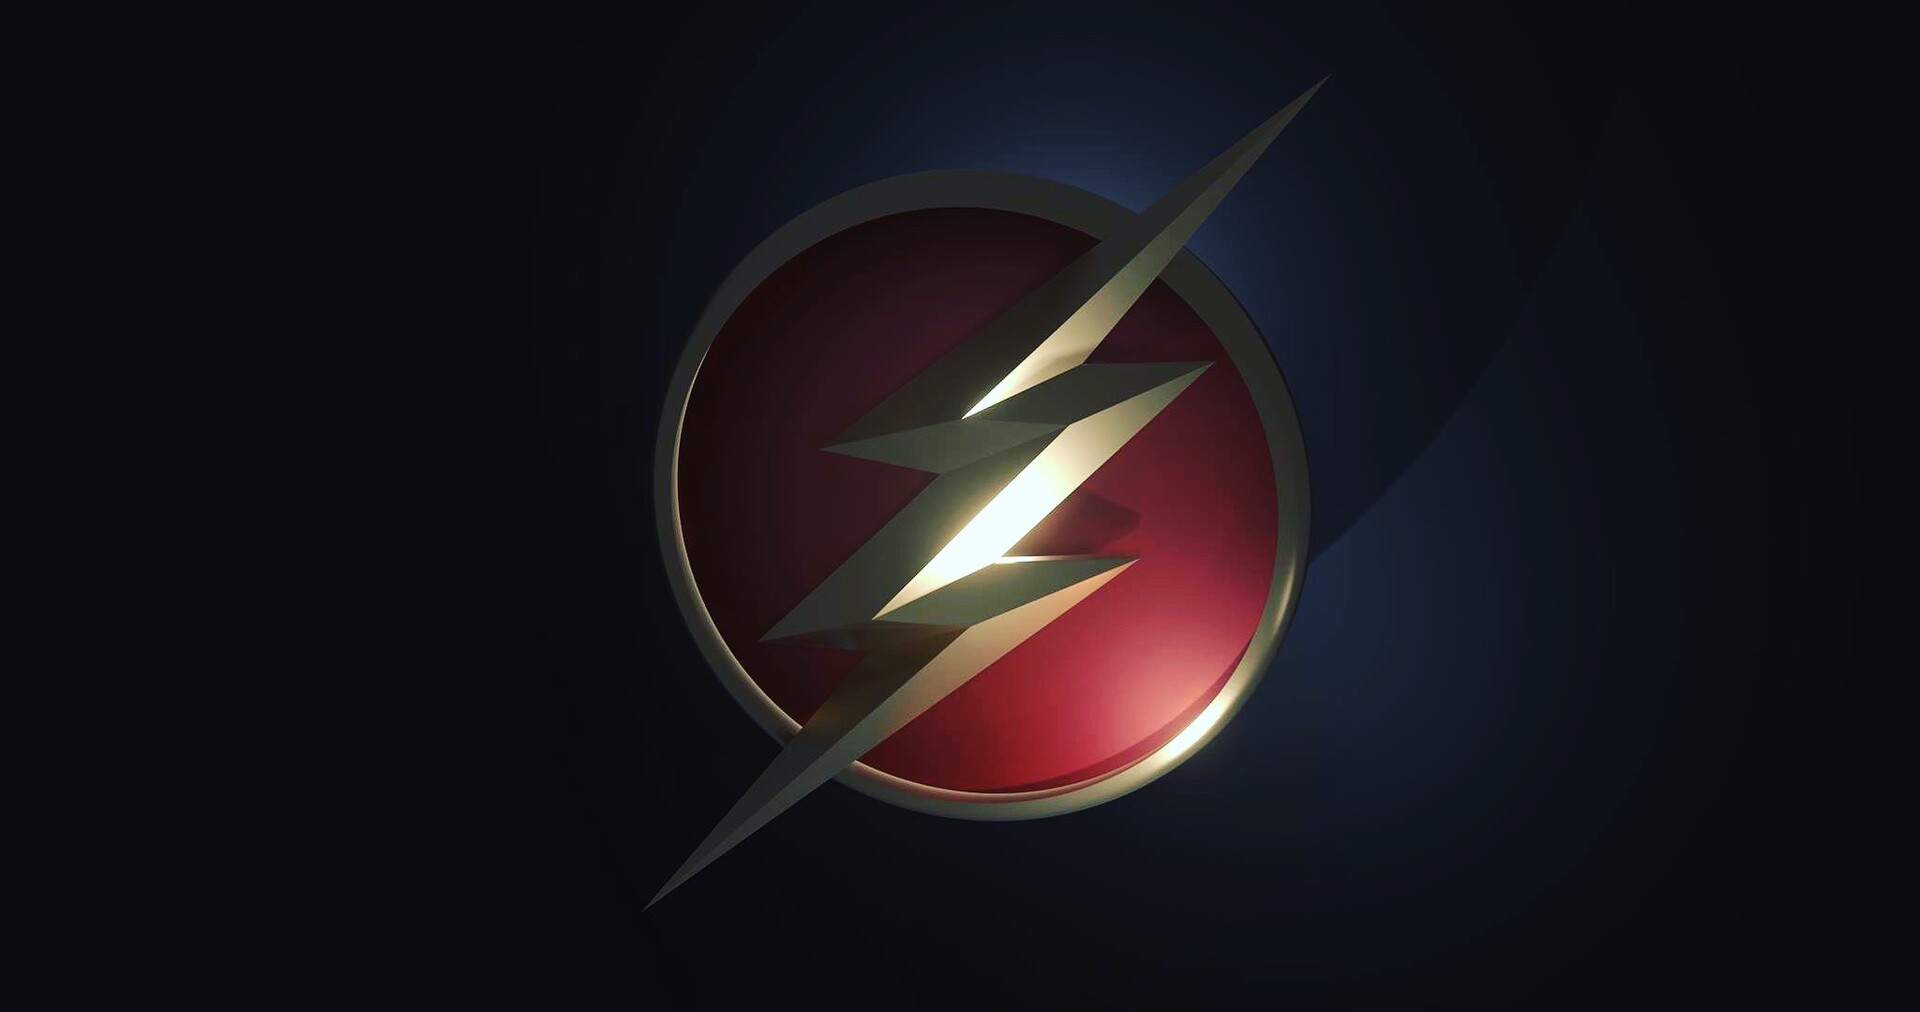 ArtStation - The Flash